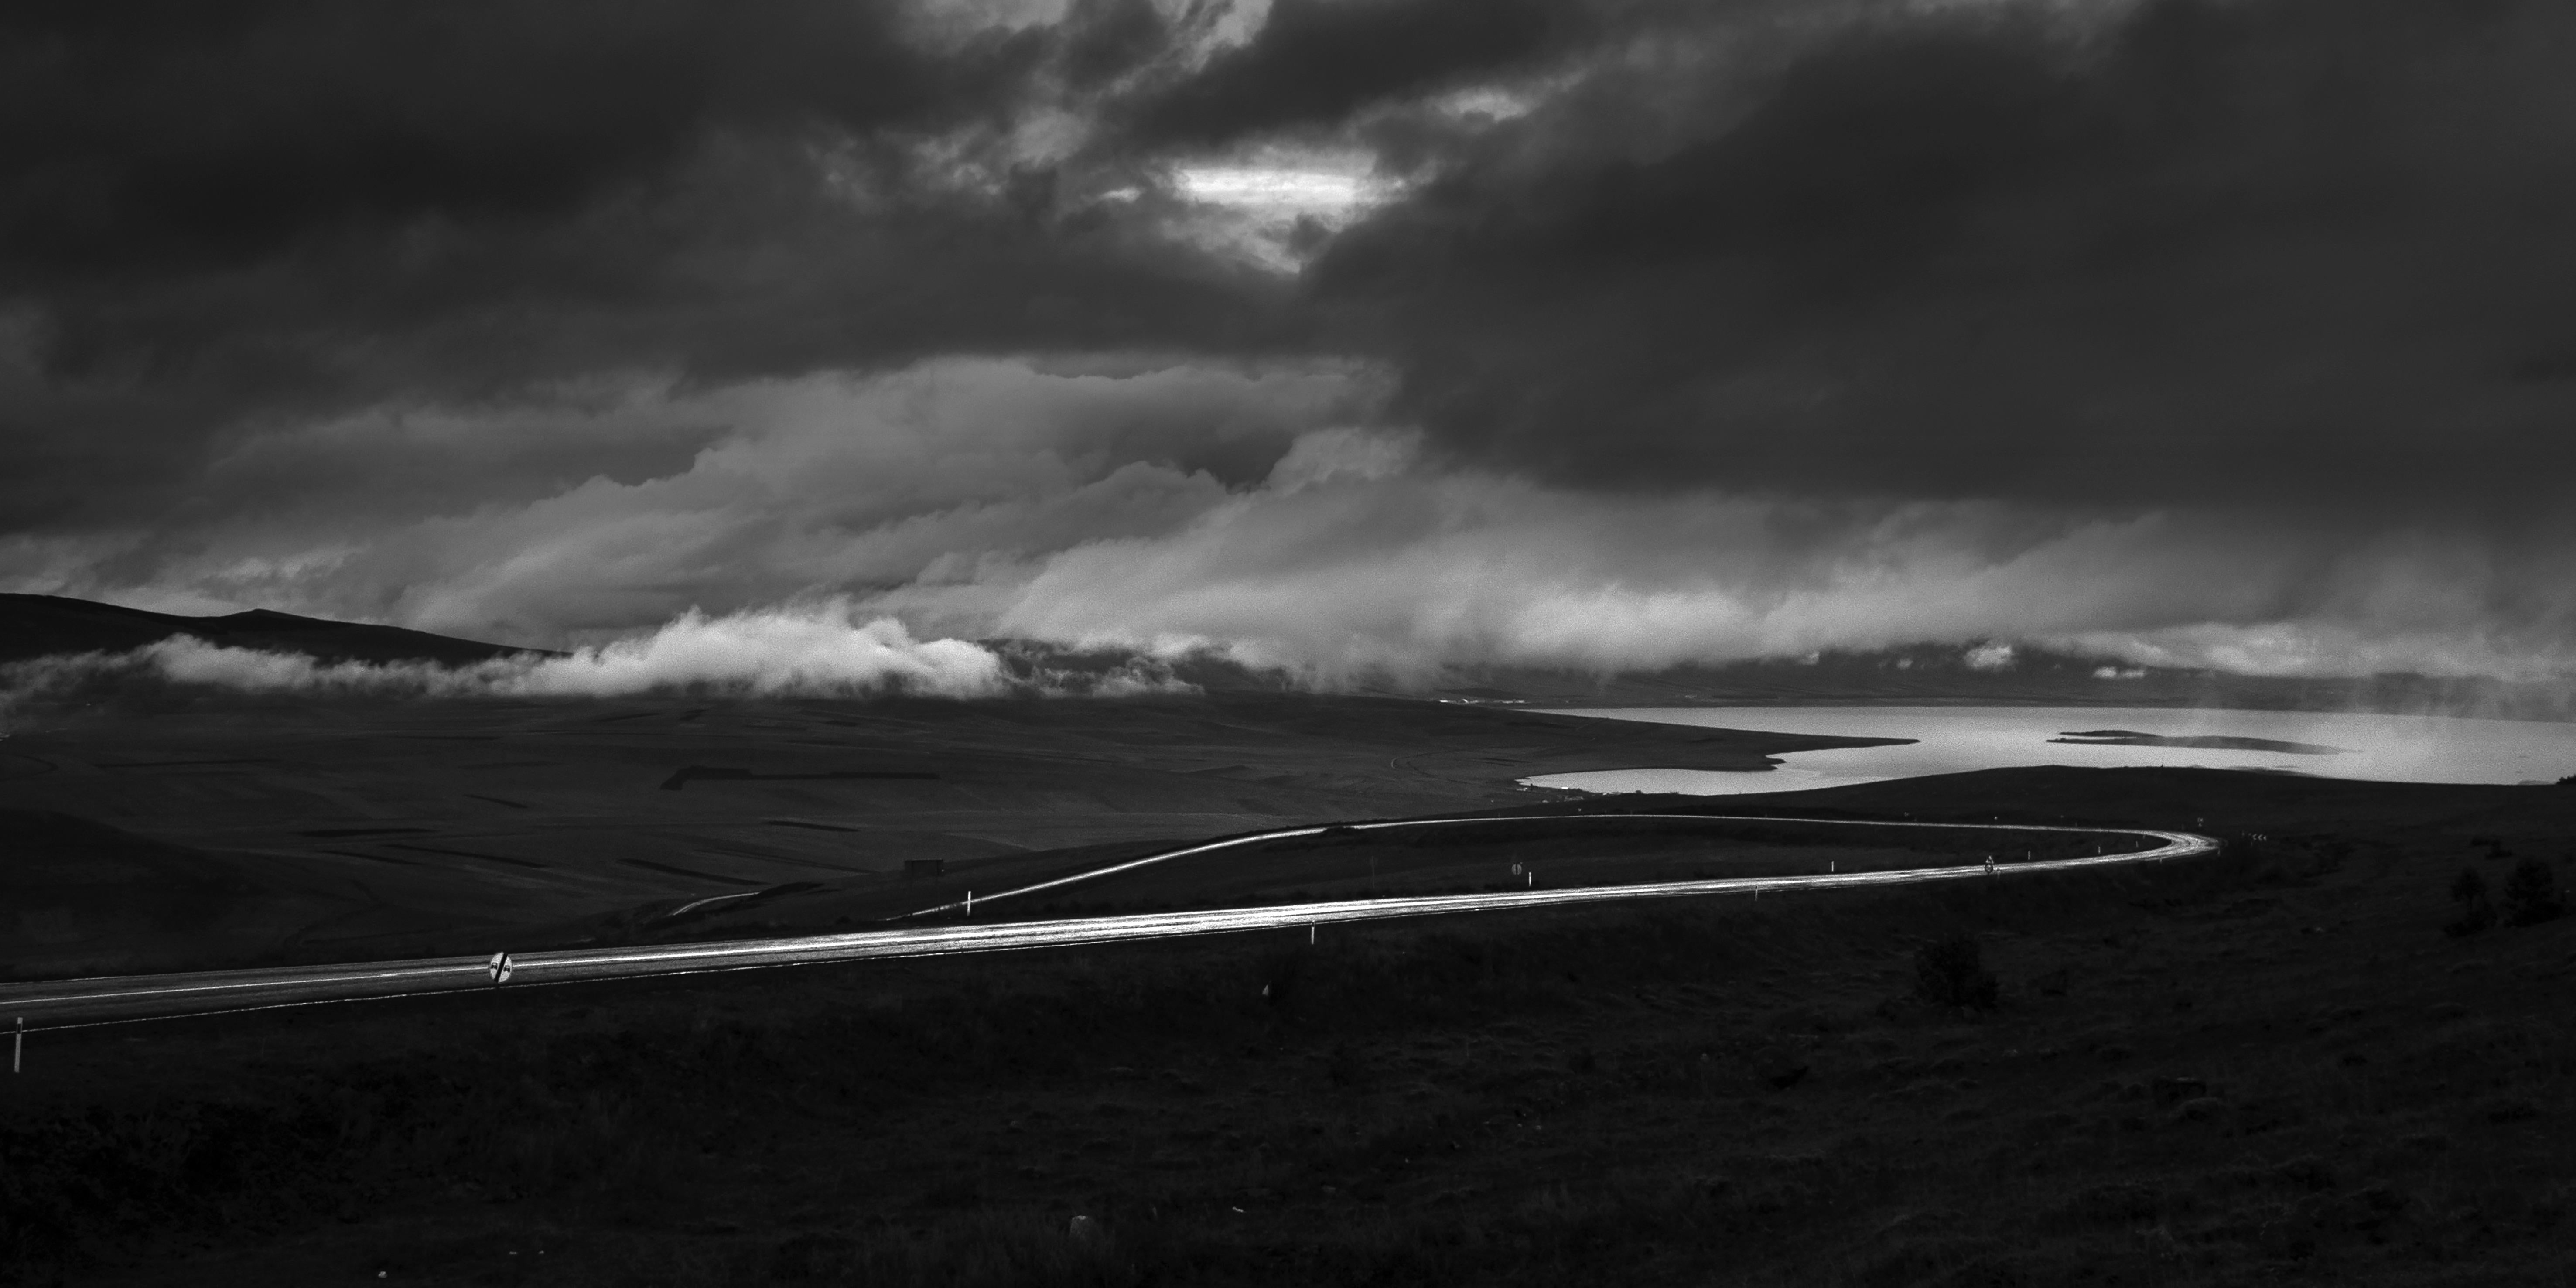 Kamil Fırat Black and White Photograph - ROAD Series